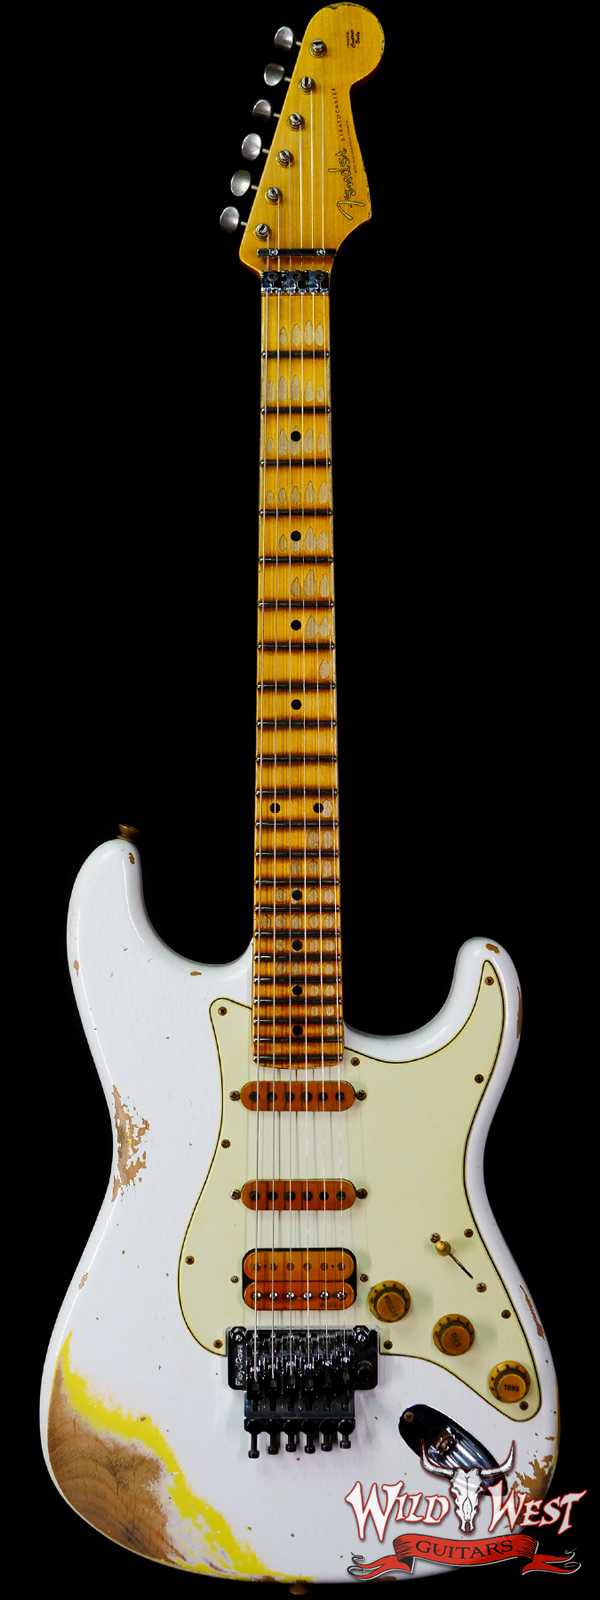 Fender Custom Shop Wild West White Lightning Stratocaster HSS Floyd Rose Maple Board 22 Frets Heavy Relic Graffiti Yellow